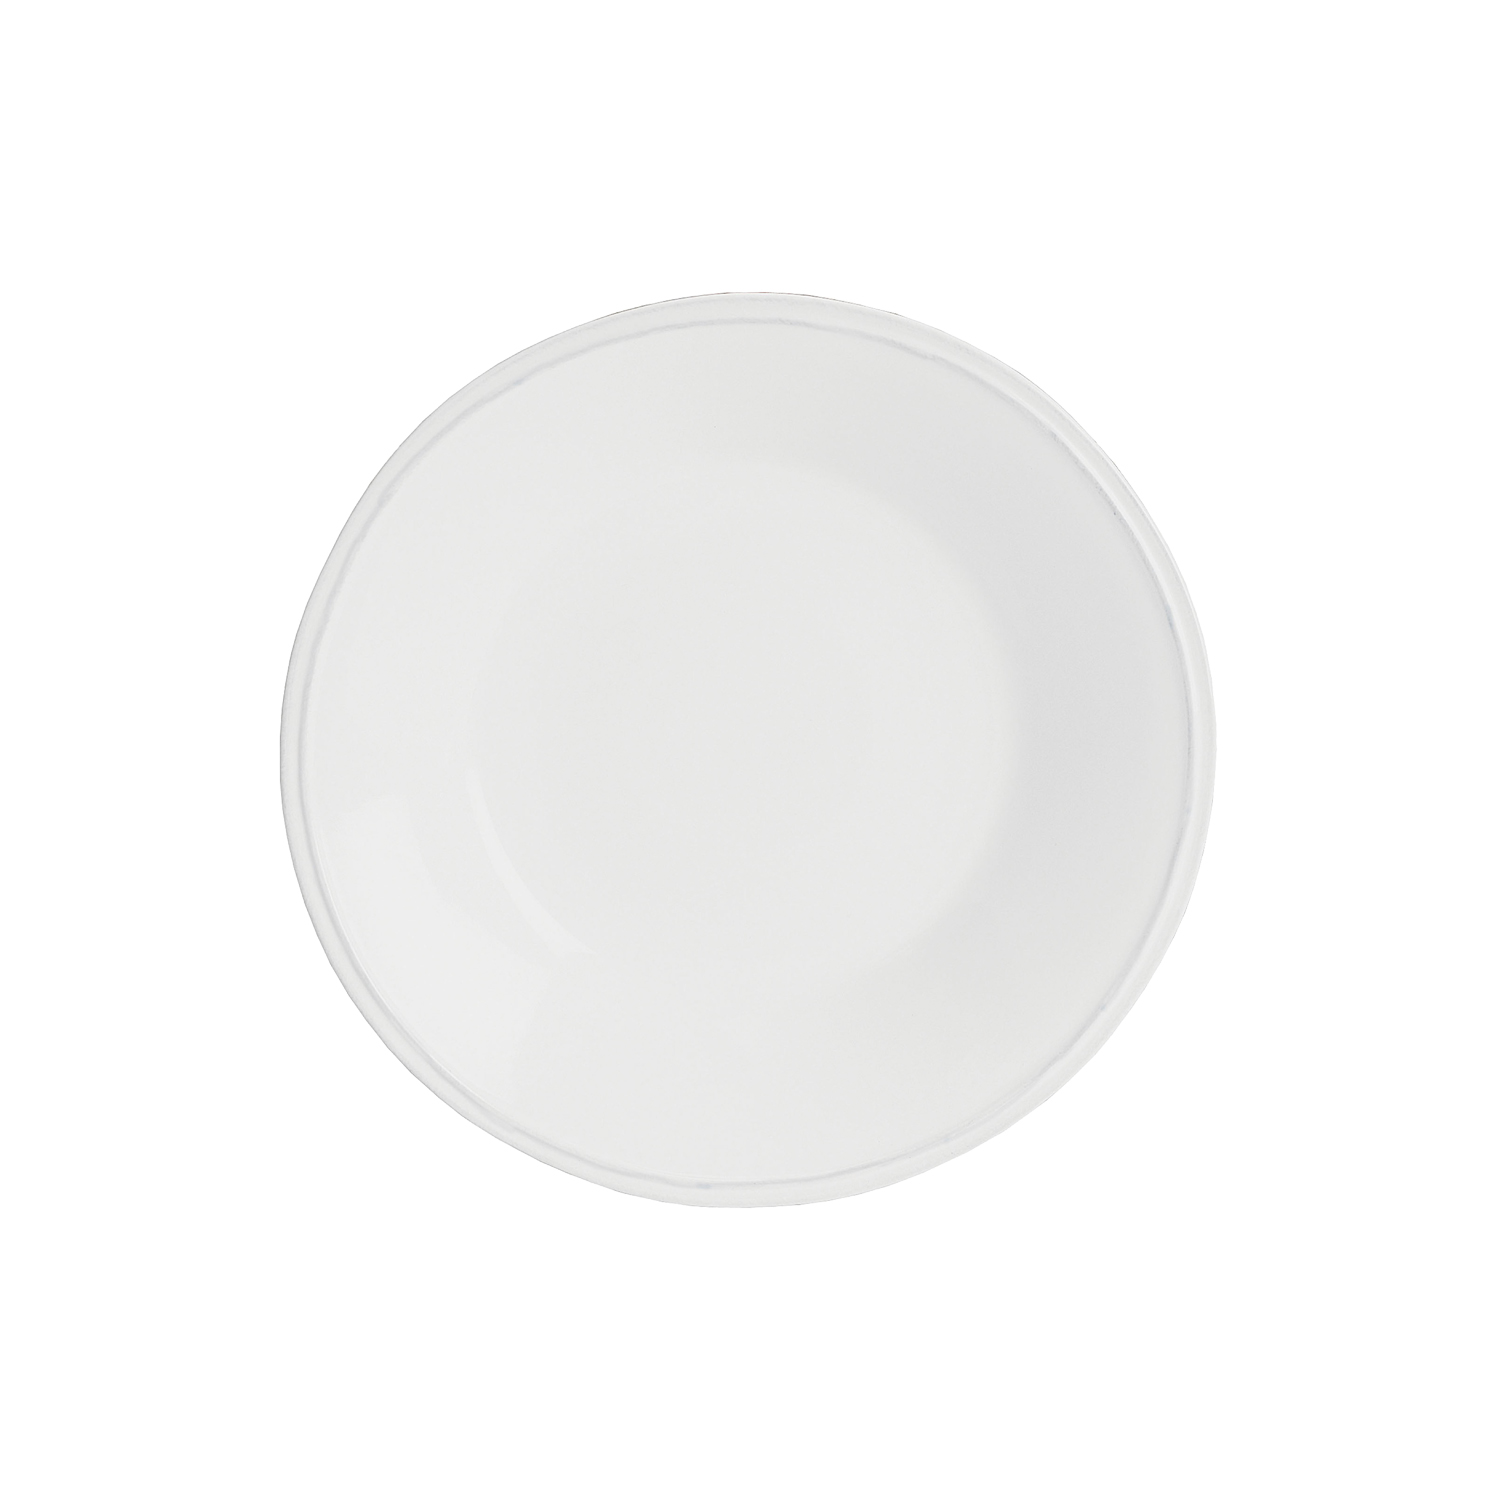 Friso White Soup/pasta Plate 26cm Gift